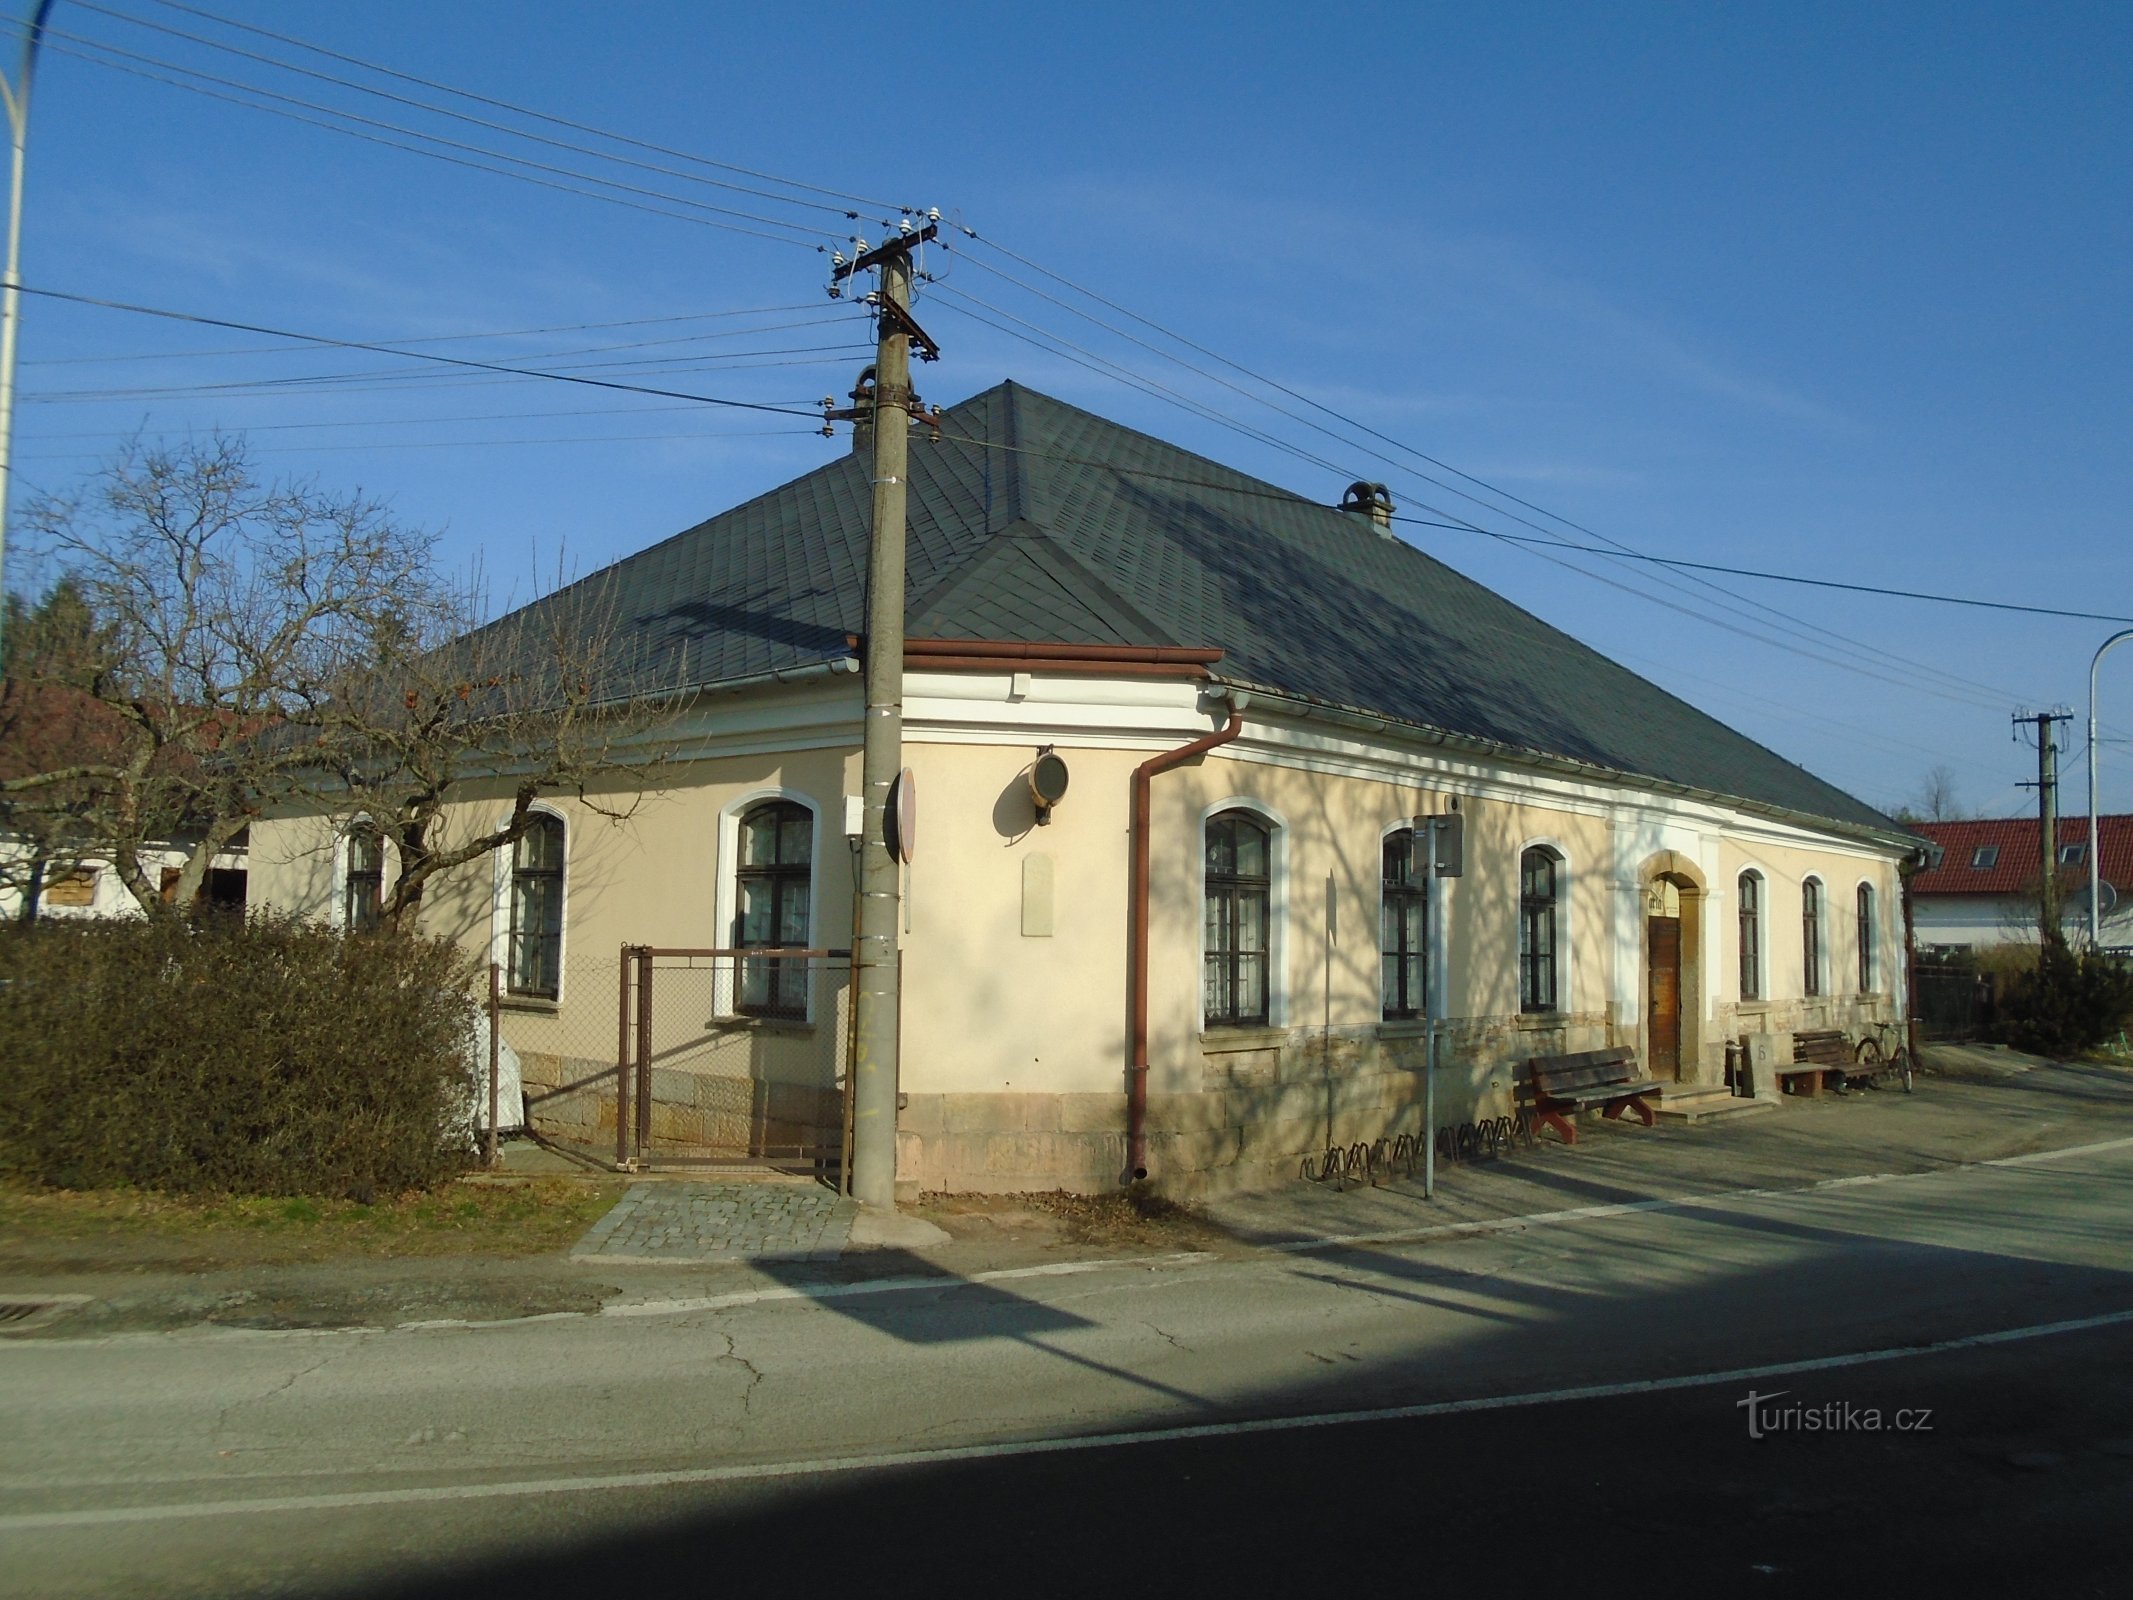 Podhůrská nr. 76 (Hradec Králové, 23.1.2019 januari XNUMX)